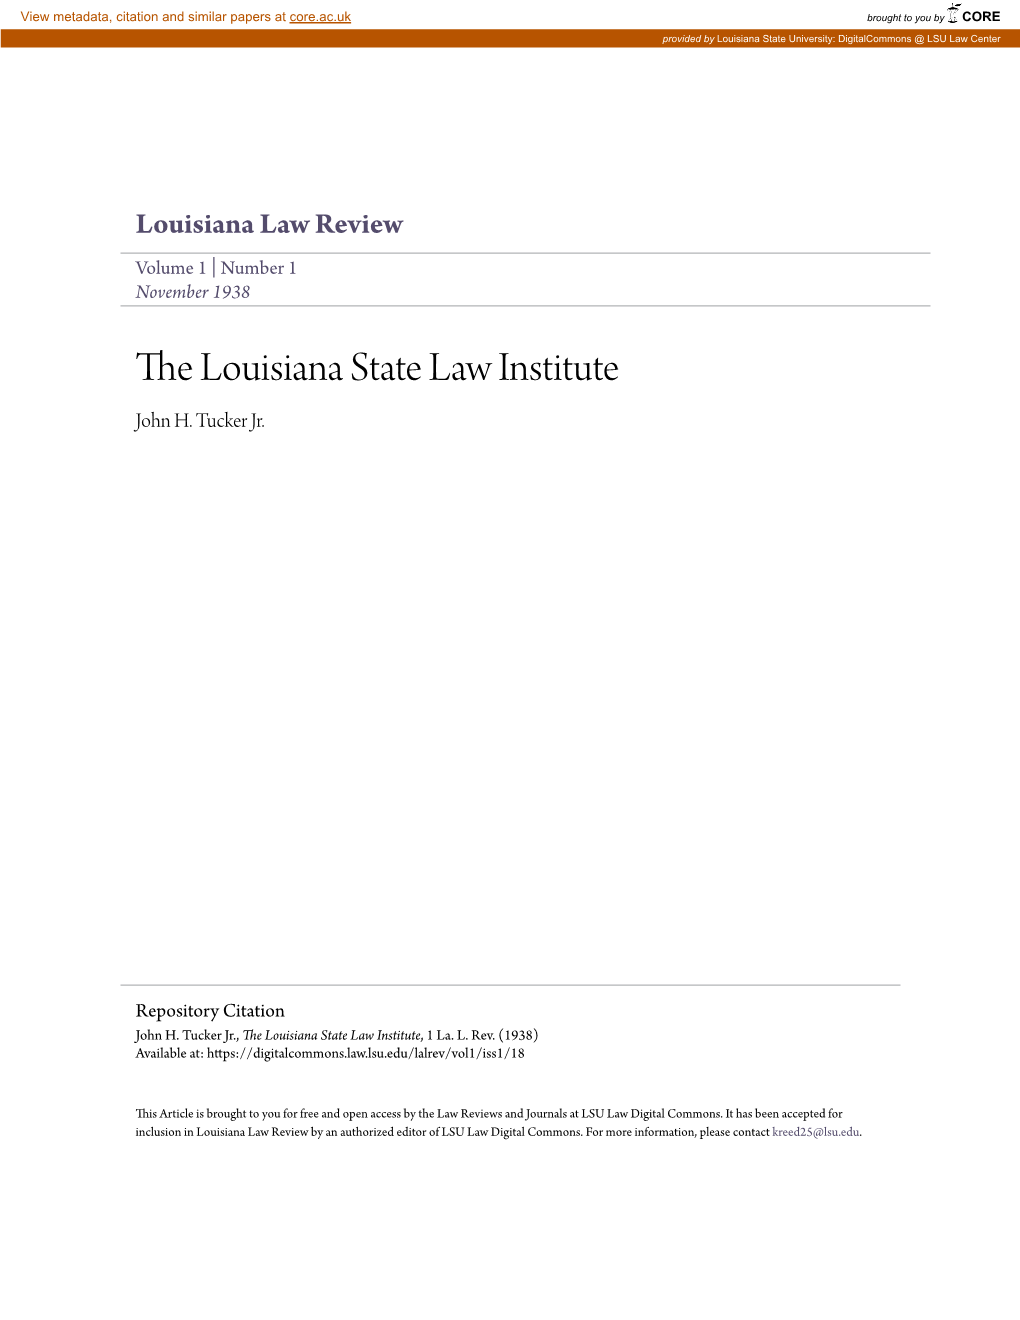 The Louisiana State Law Institute John H